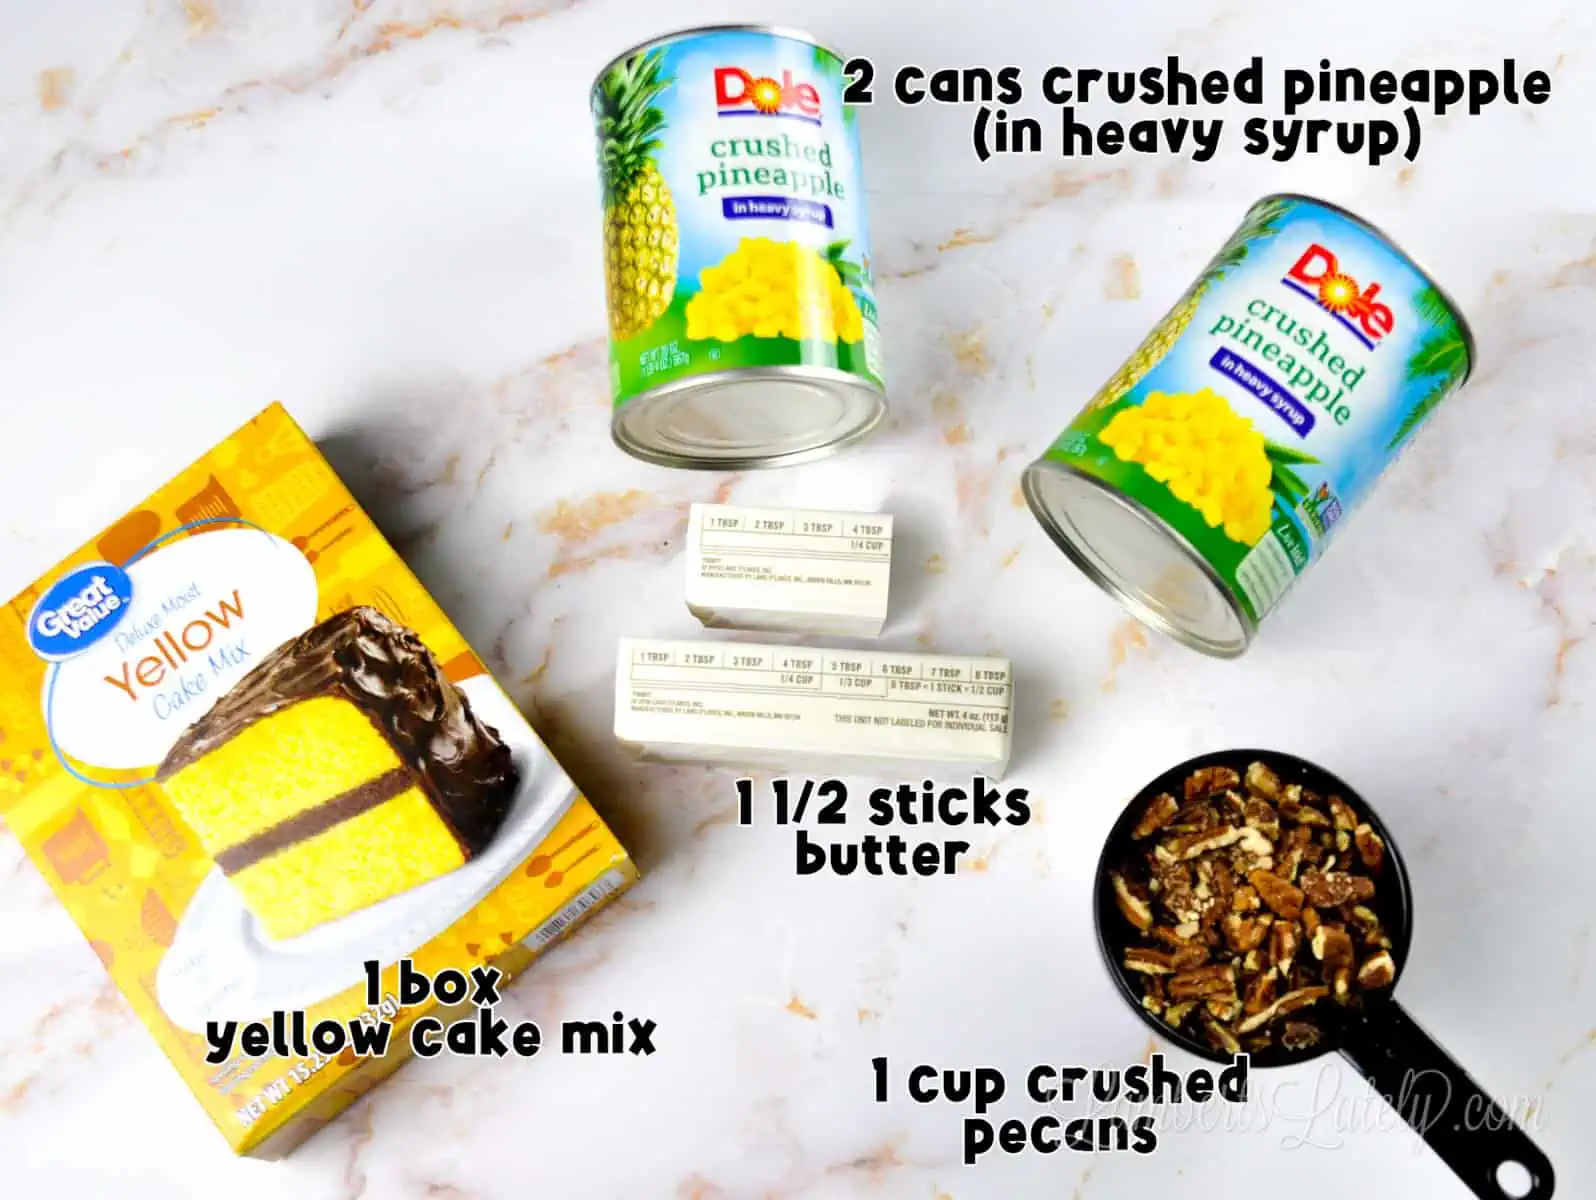 ingredients for pineapple dump cake.